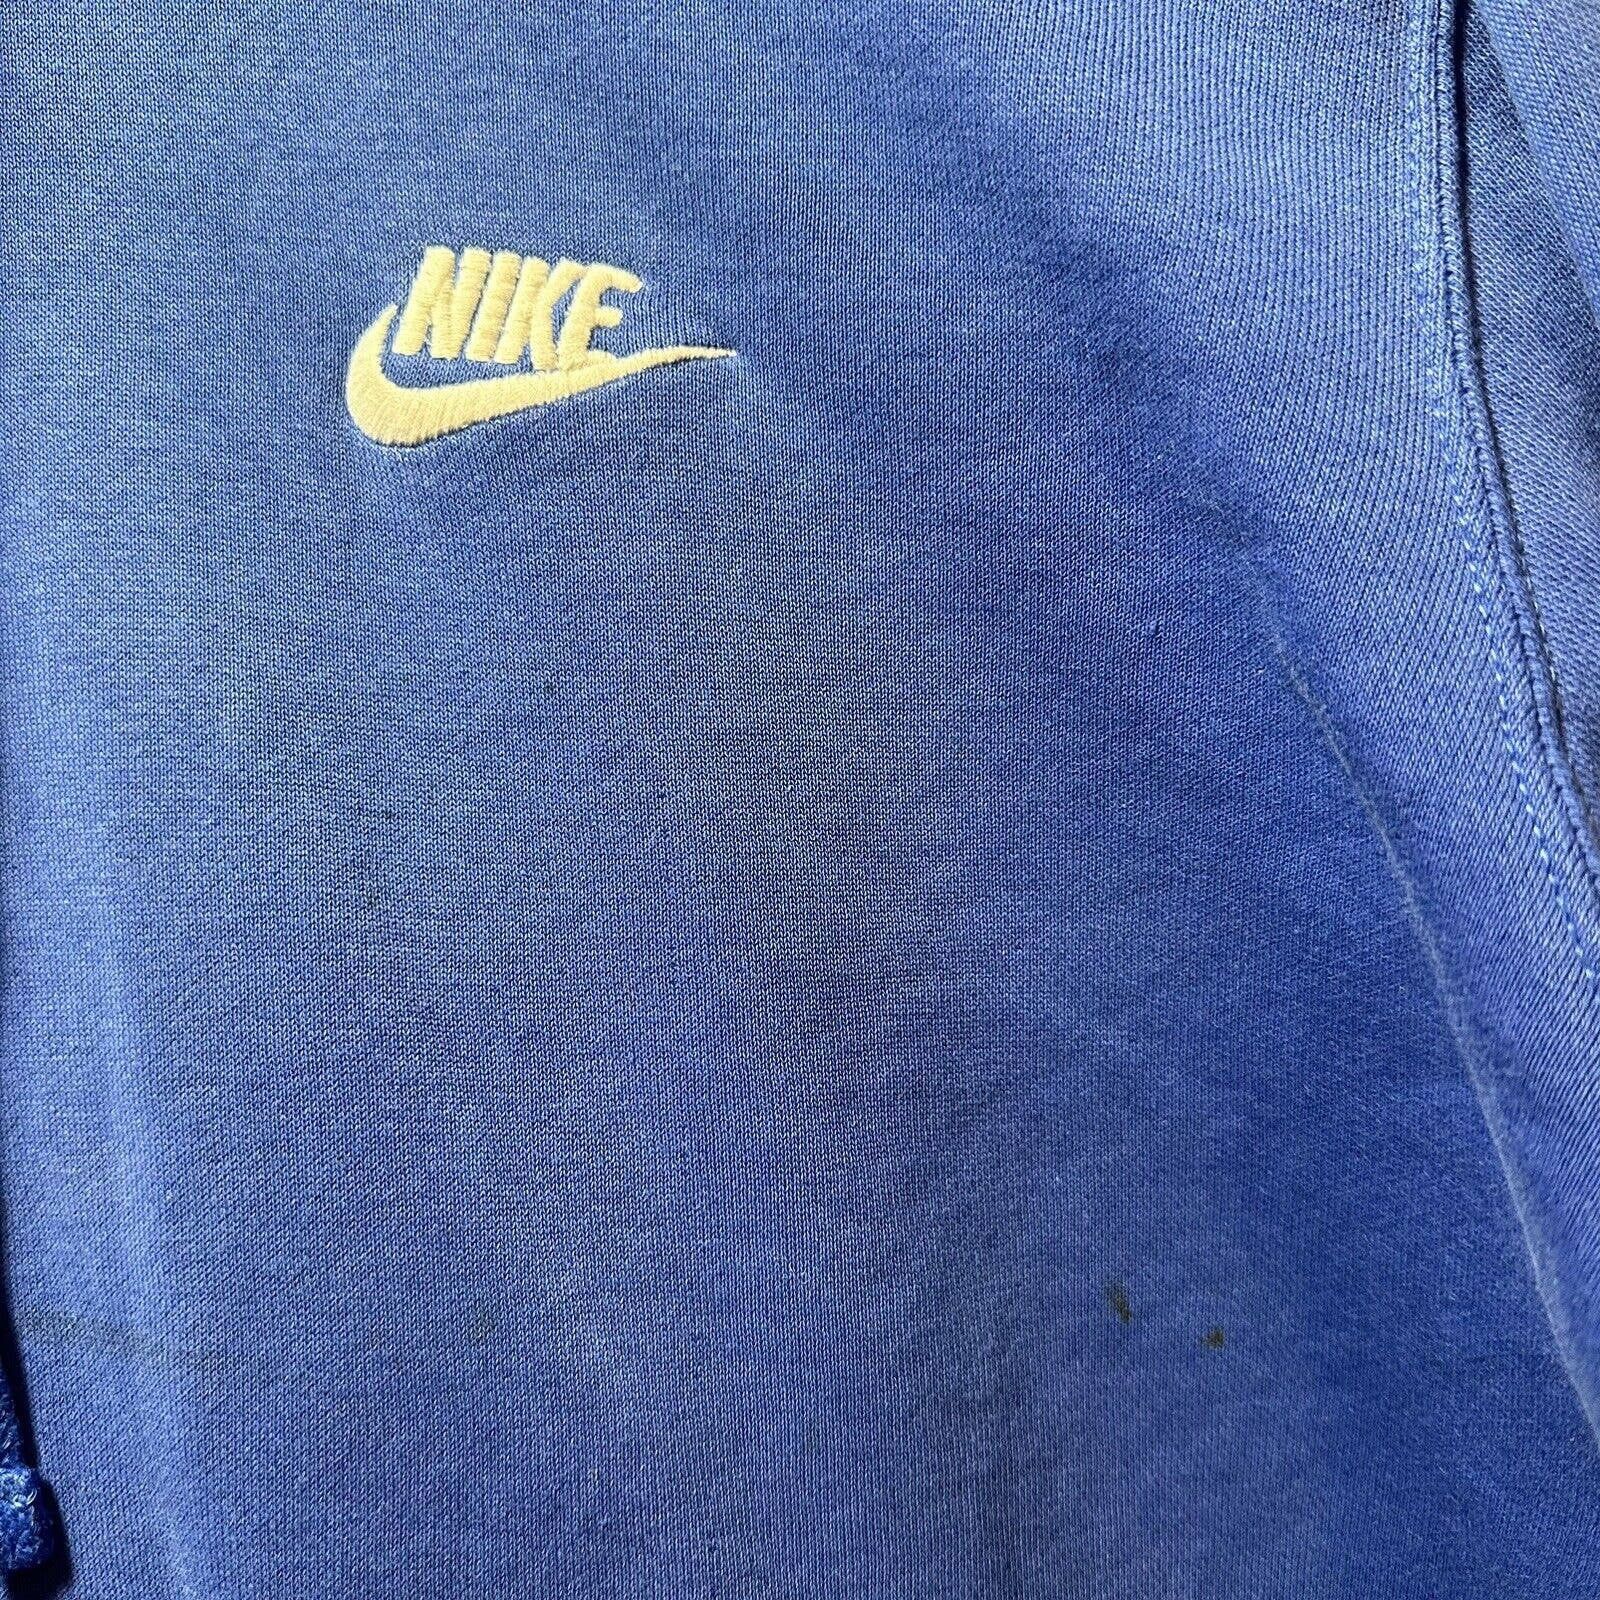 Nike Nike Logo Air Hoodie Vintage 90s Y2K Blue L Blue Tag Size US L / EU 52-54 / 3 - 4 Thumbnail